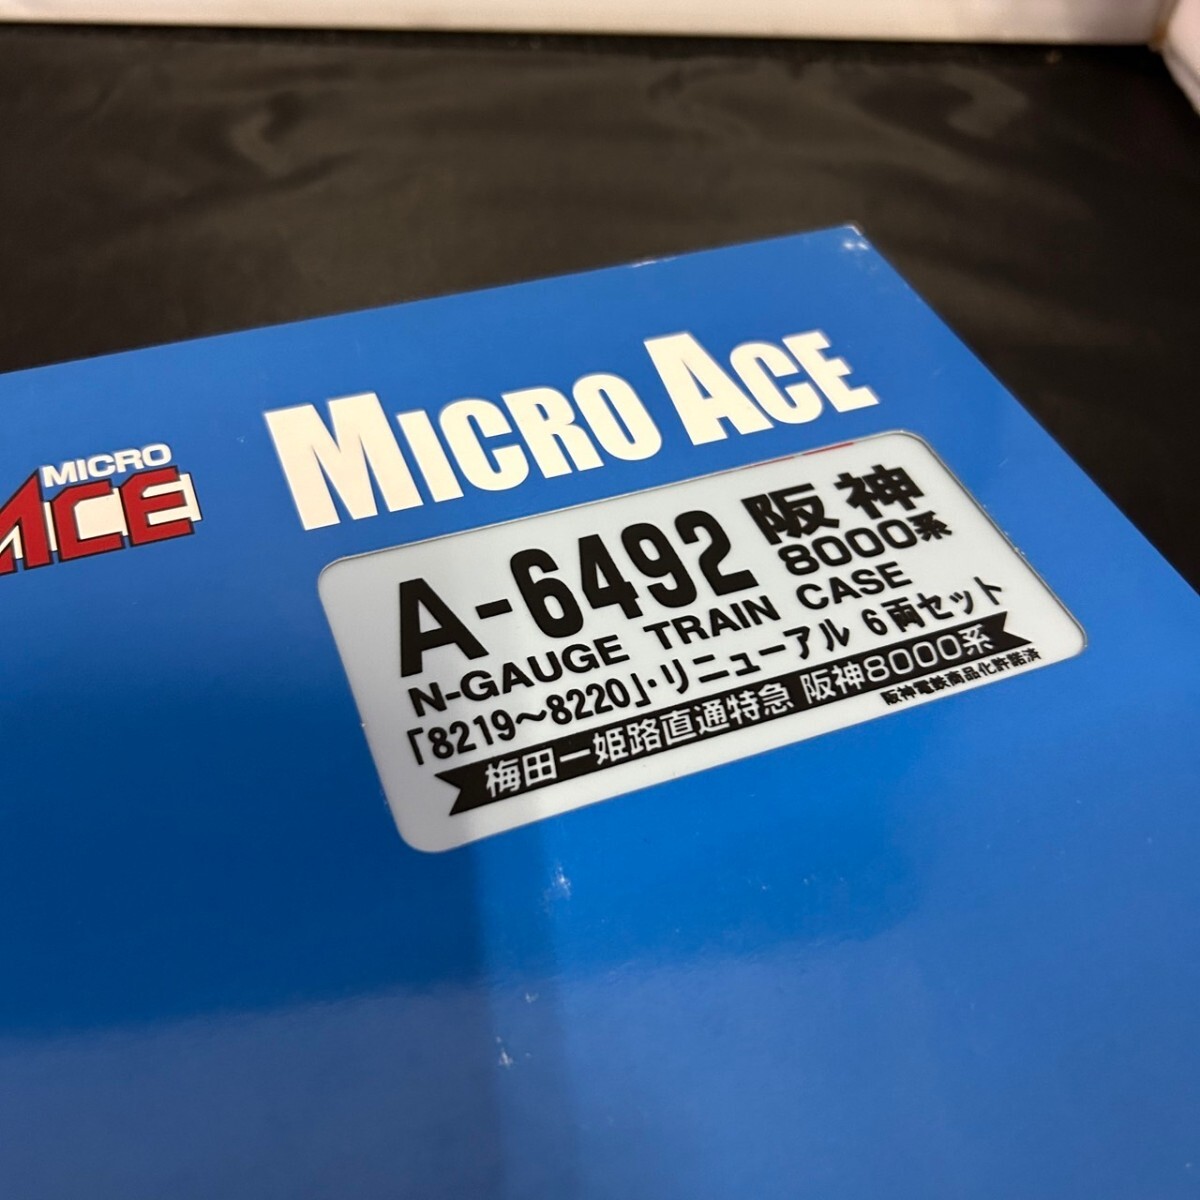 MICRO ACE マイクロエース A-6492 阪神8000系 「8219-8220」 リニューアル 6両セット N-GAUGE TRAIN CASE Nゲージ_画像10